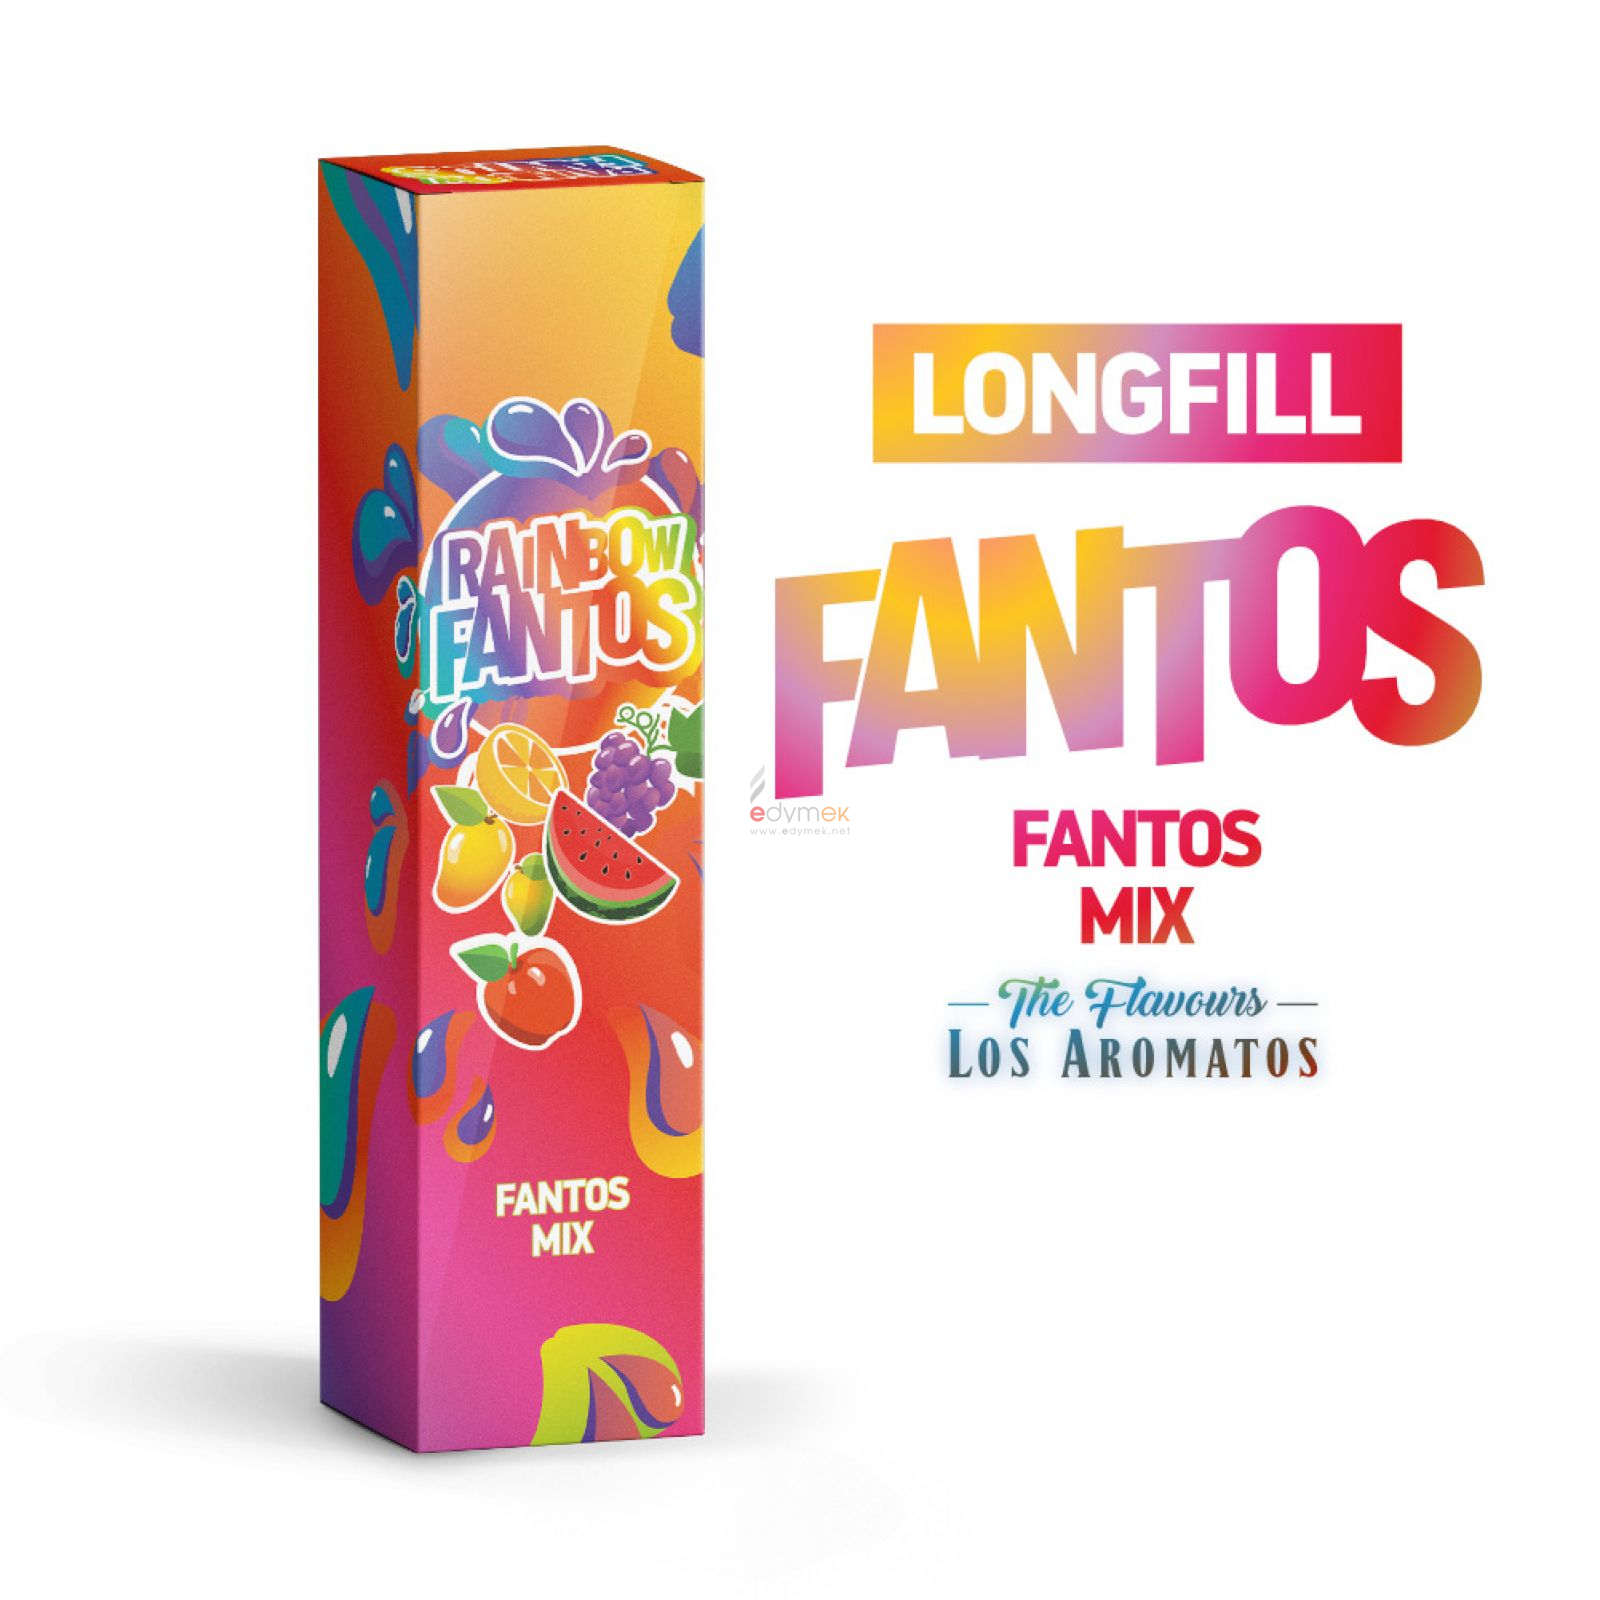 longfill-fantos-koncentrat-9ml-rainbow-fantos-ea7736e944bb48c99efb70bc45ade032-2fabb677.jpg